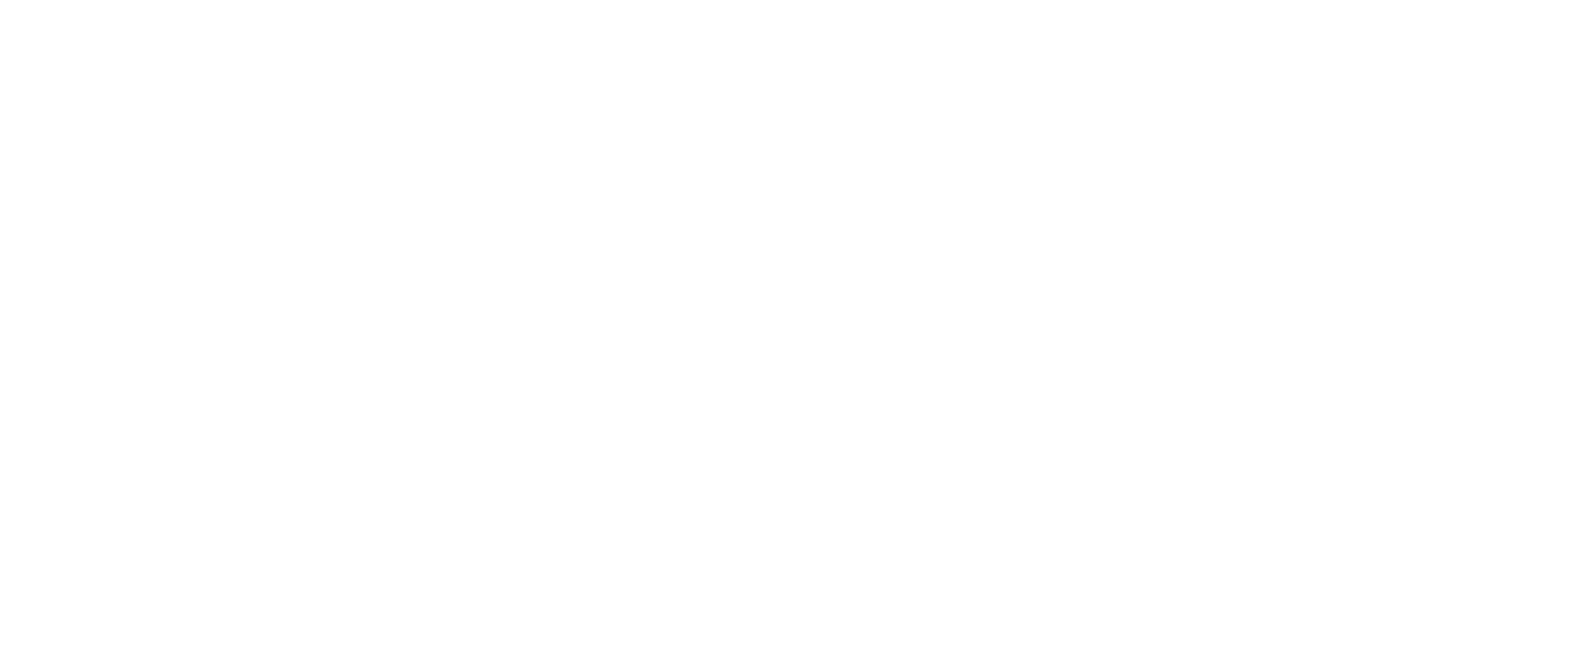 UL Solutions logo large for dark backgrounds (transparent PNG)